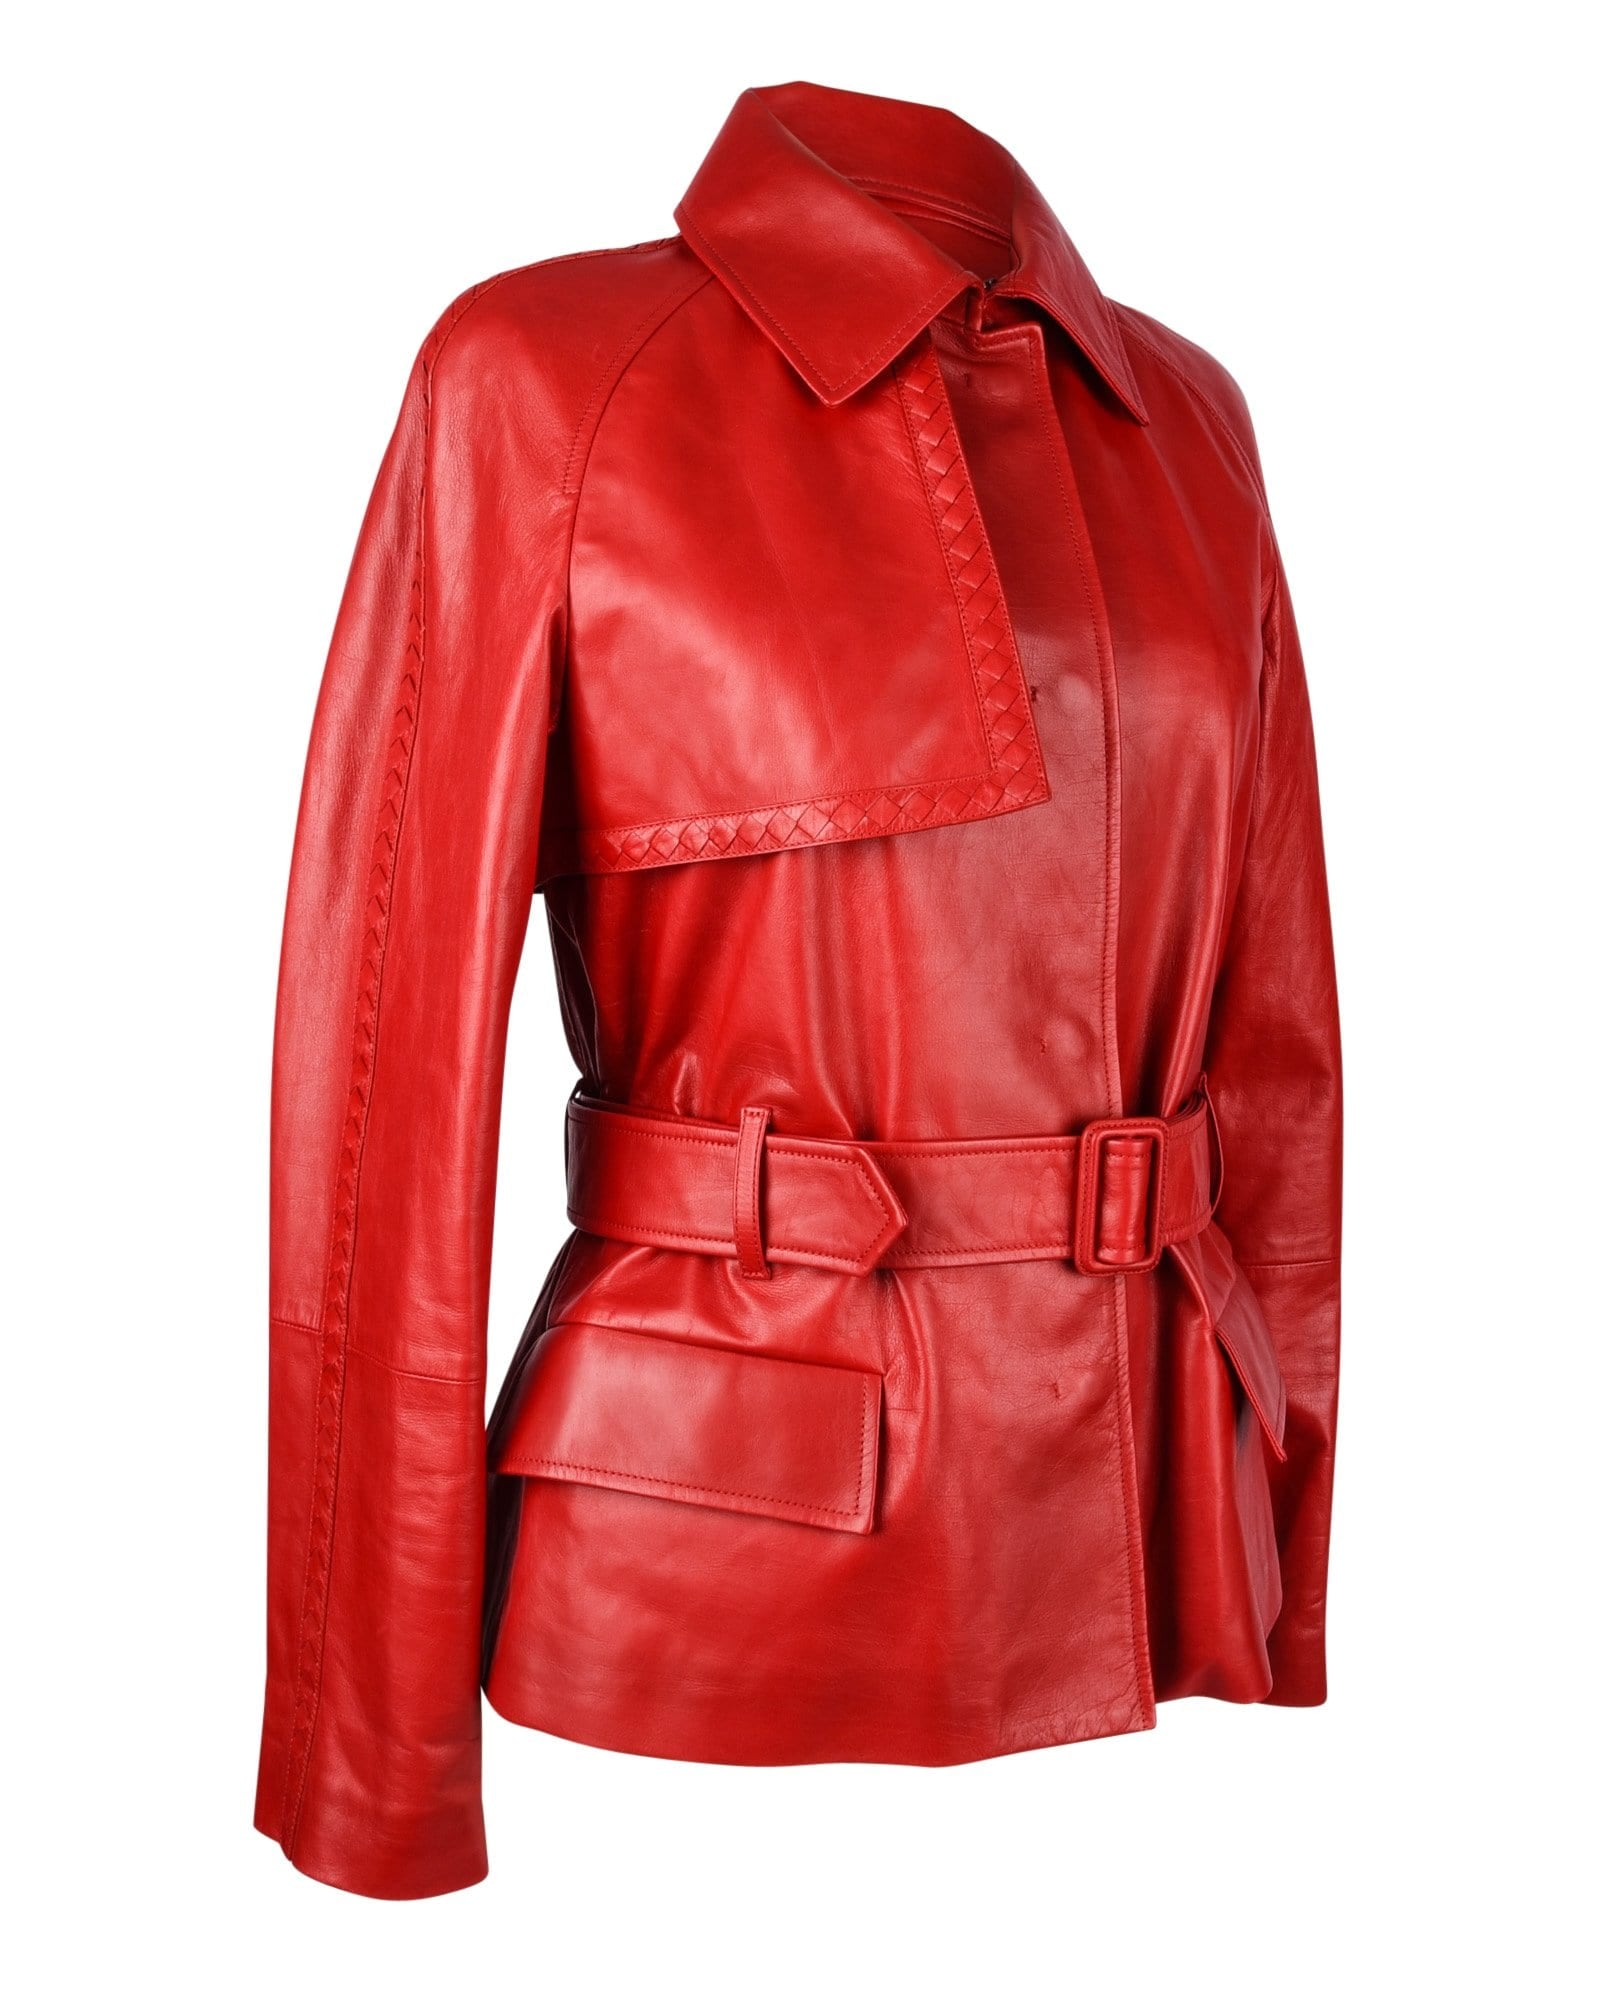 Bottega Veneta Jacket Red Leather Trench Inspired 42 / 8 New – Mightychic